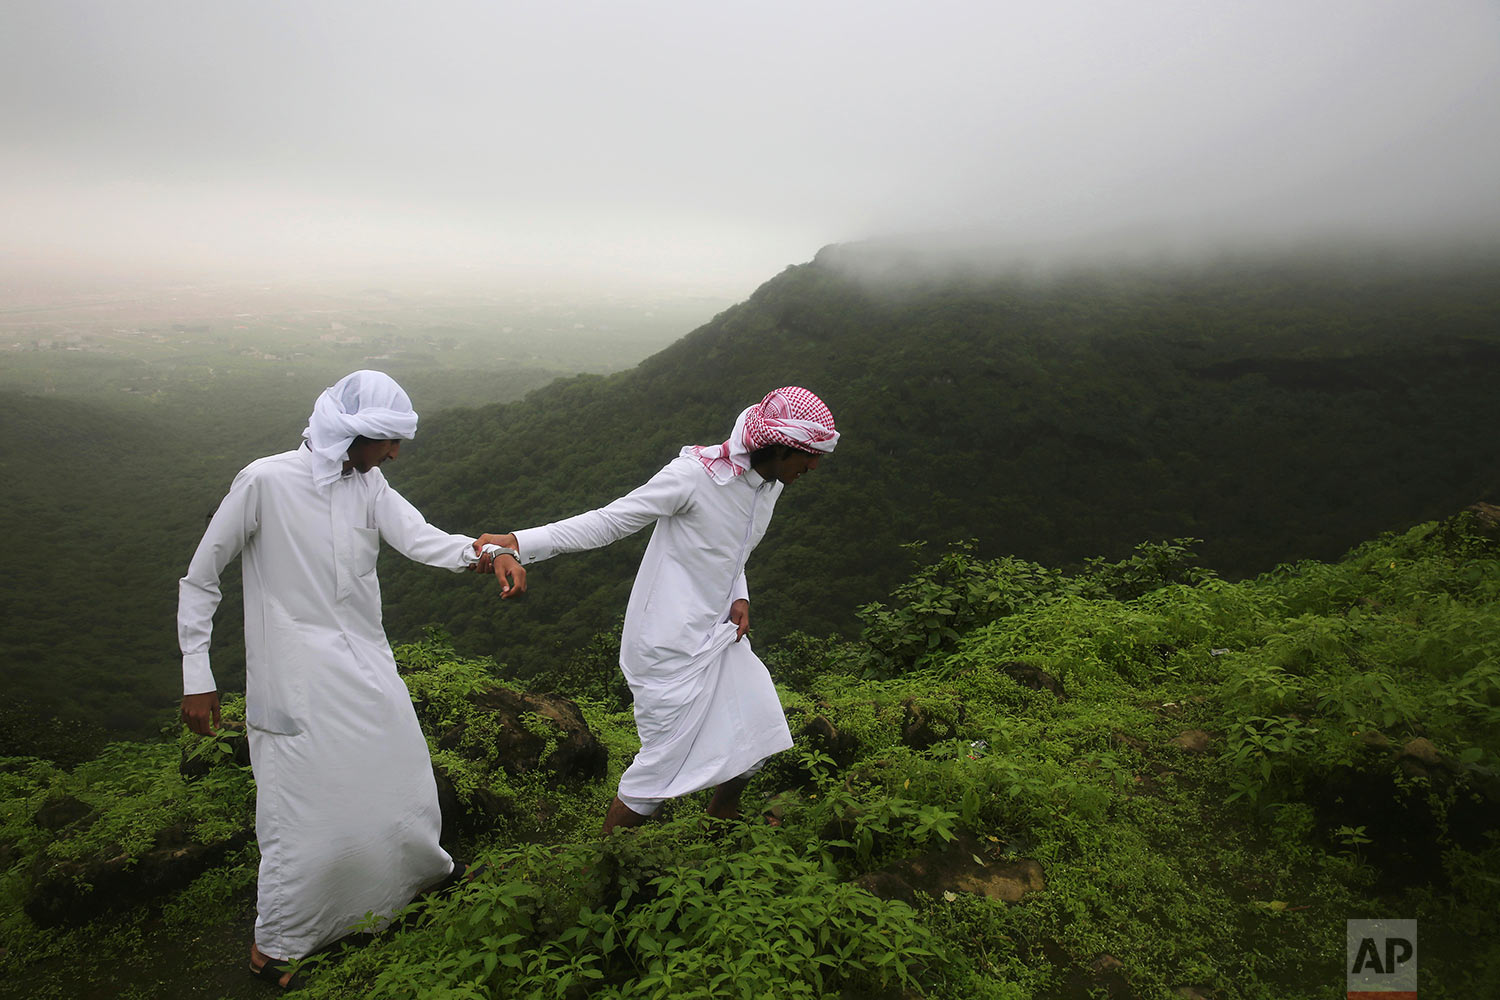  Mohammad al-Bariki, right, 17, leads his half-brother Sagheer al-Bariki, 17, across a cliff ledge in the Jabal Ayoub mountains north of Salalah, Oman on Aug. 2, 2017. (AP Photo/Sam McNeil) 